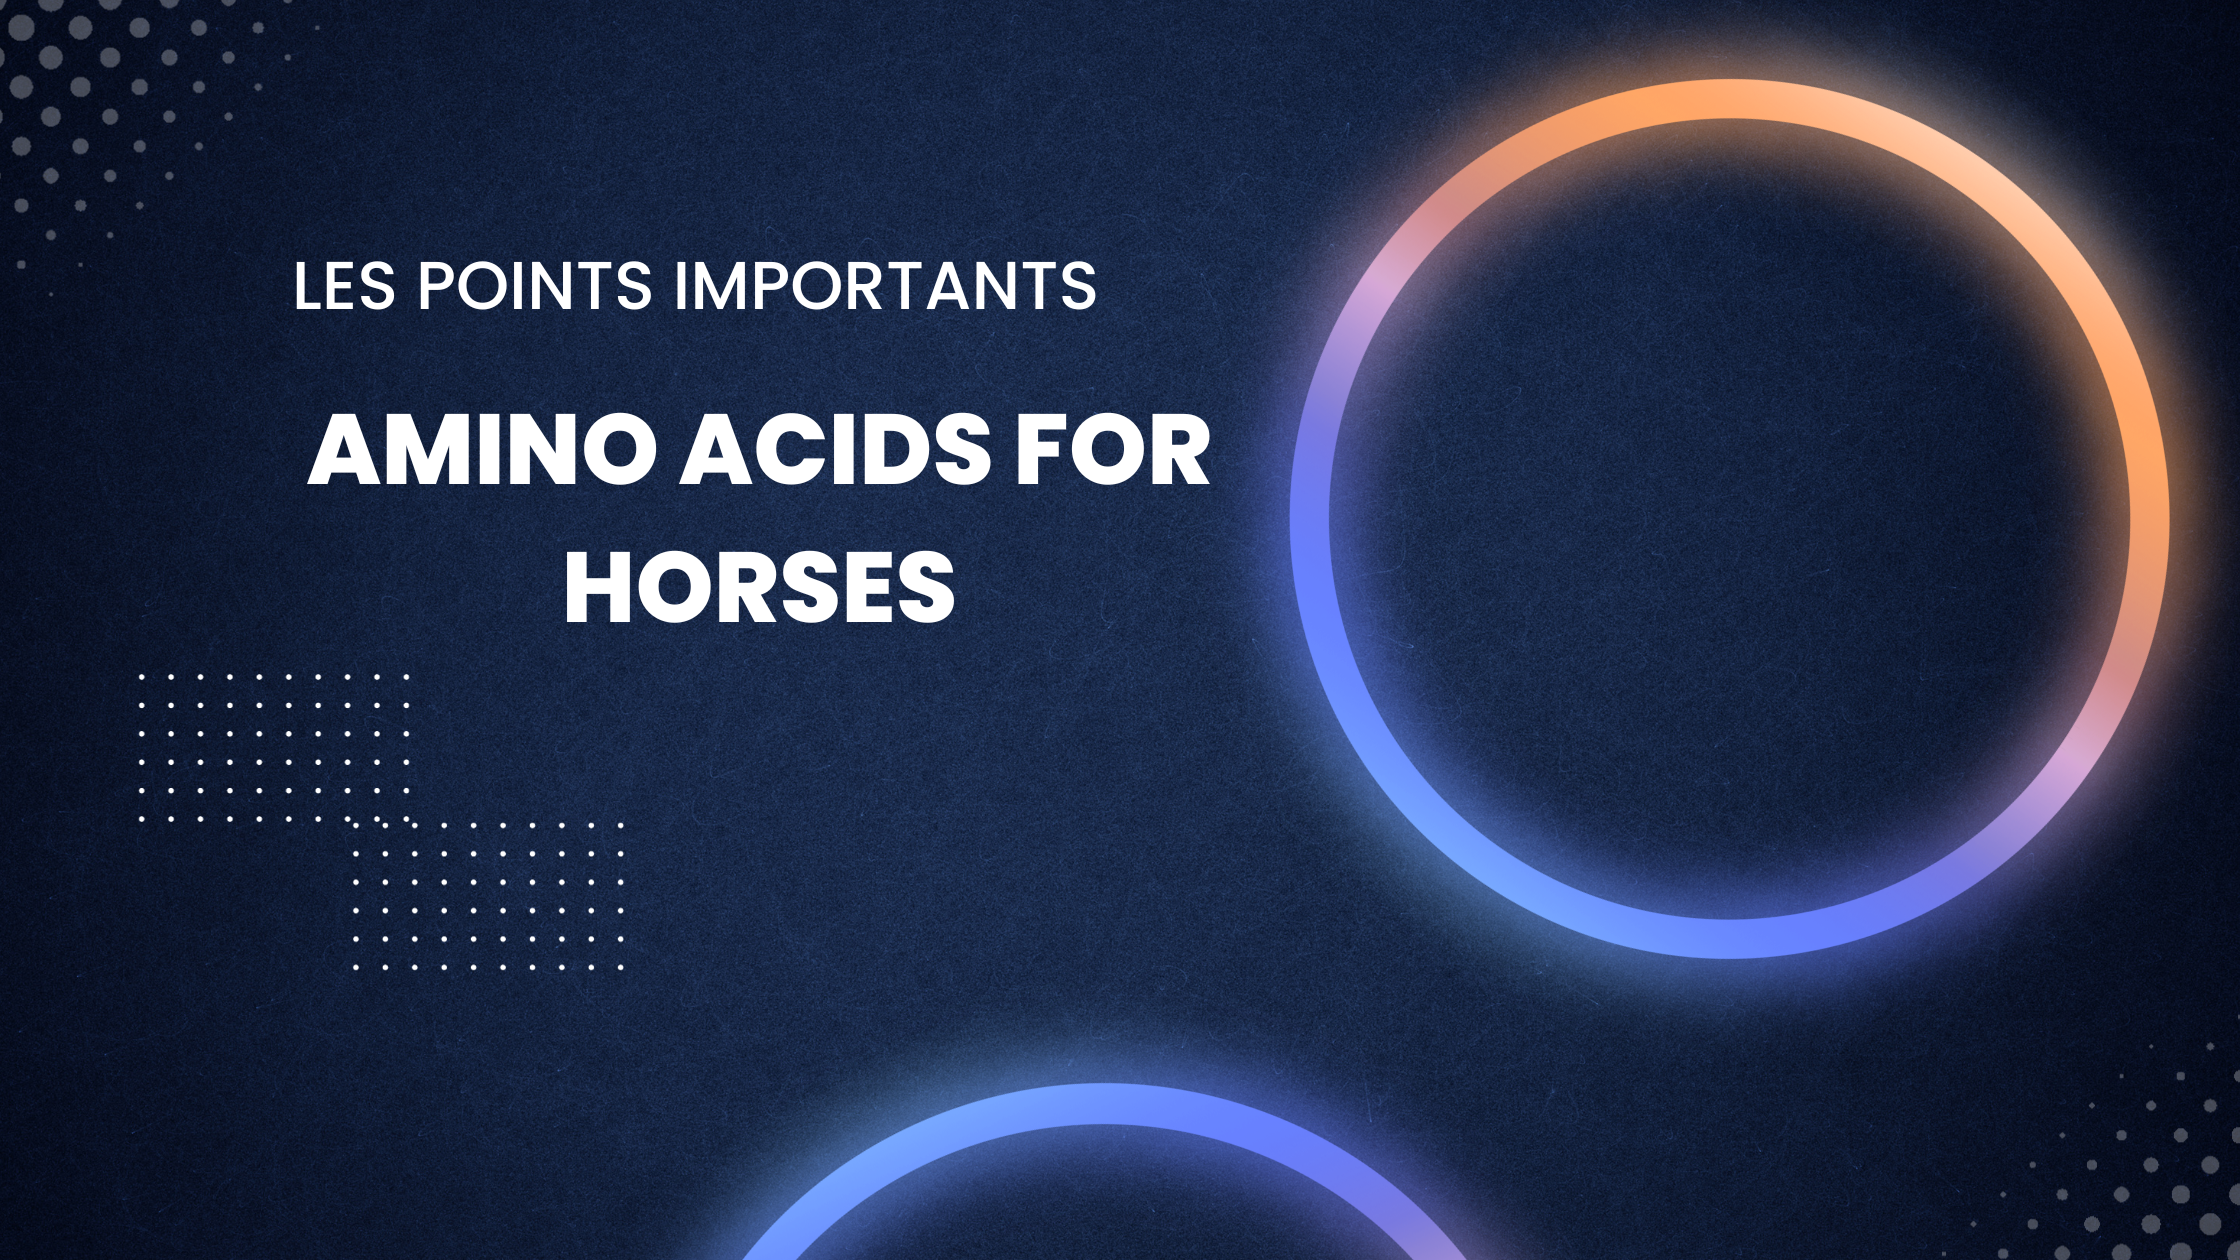 amino acids for horses | Les points importants